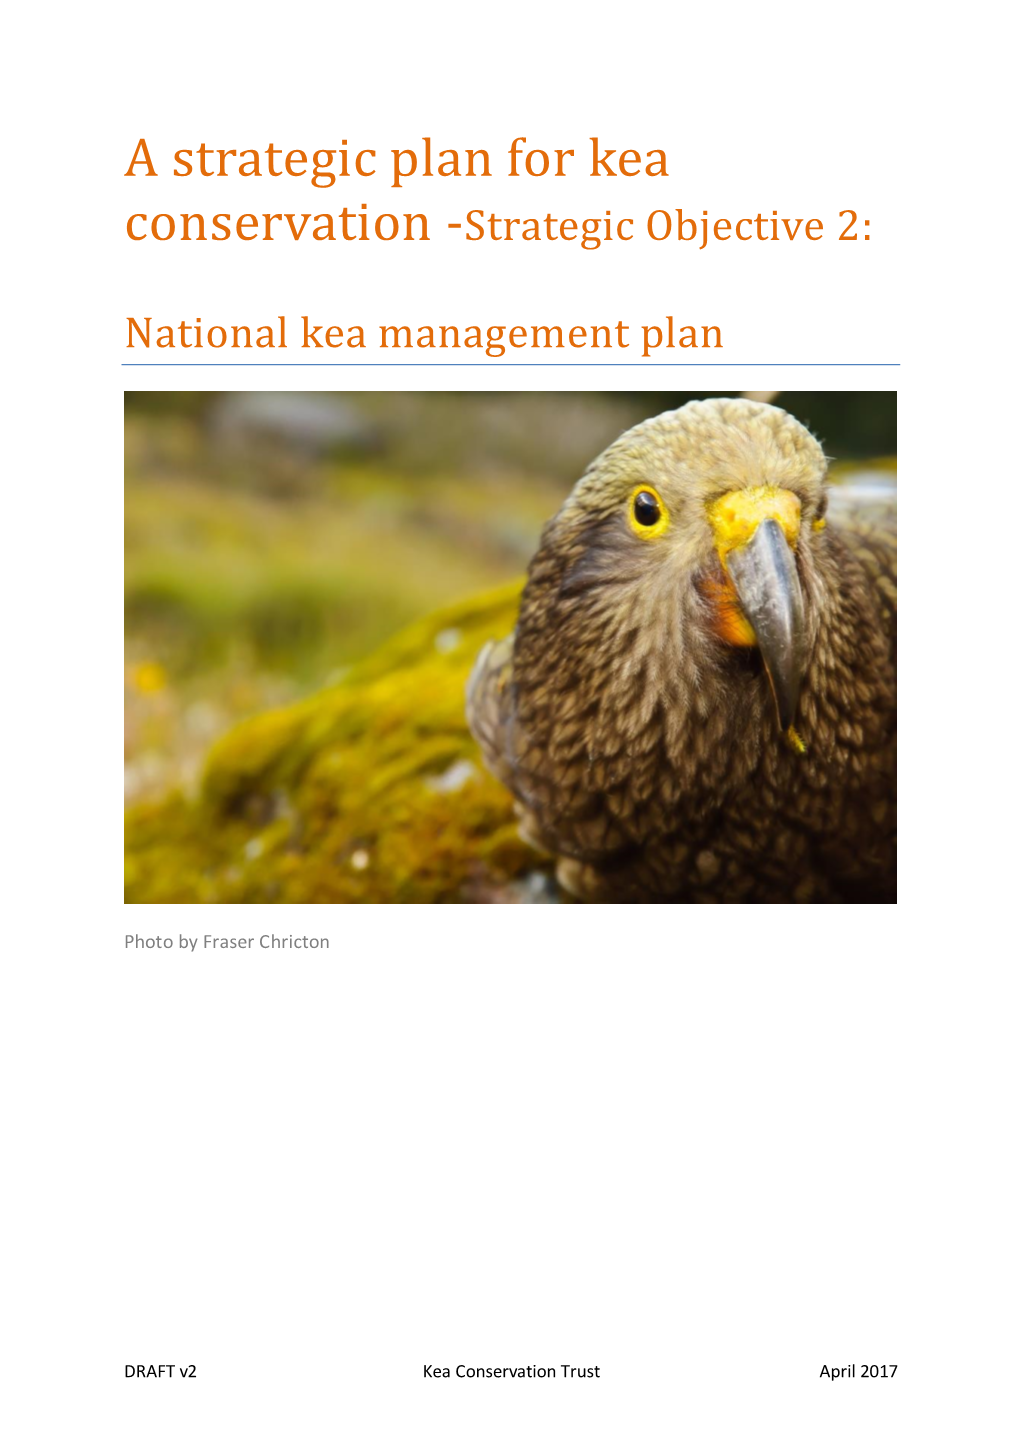 A Strategic Plan for Kea Conservation -Strategic Objective 2